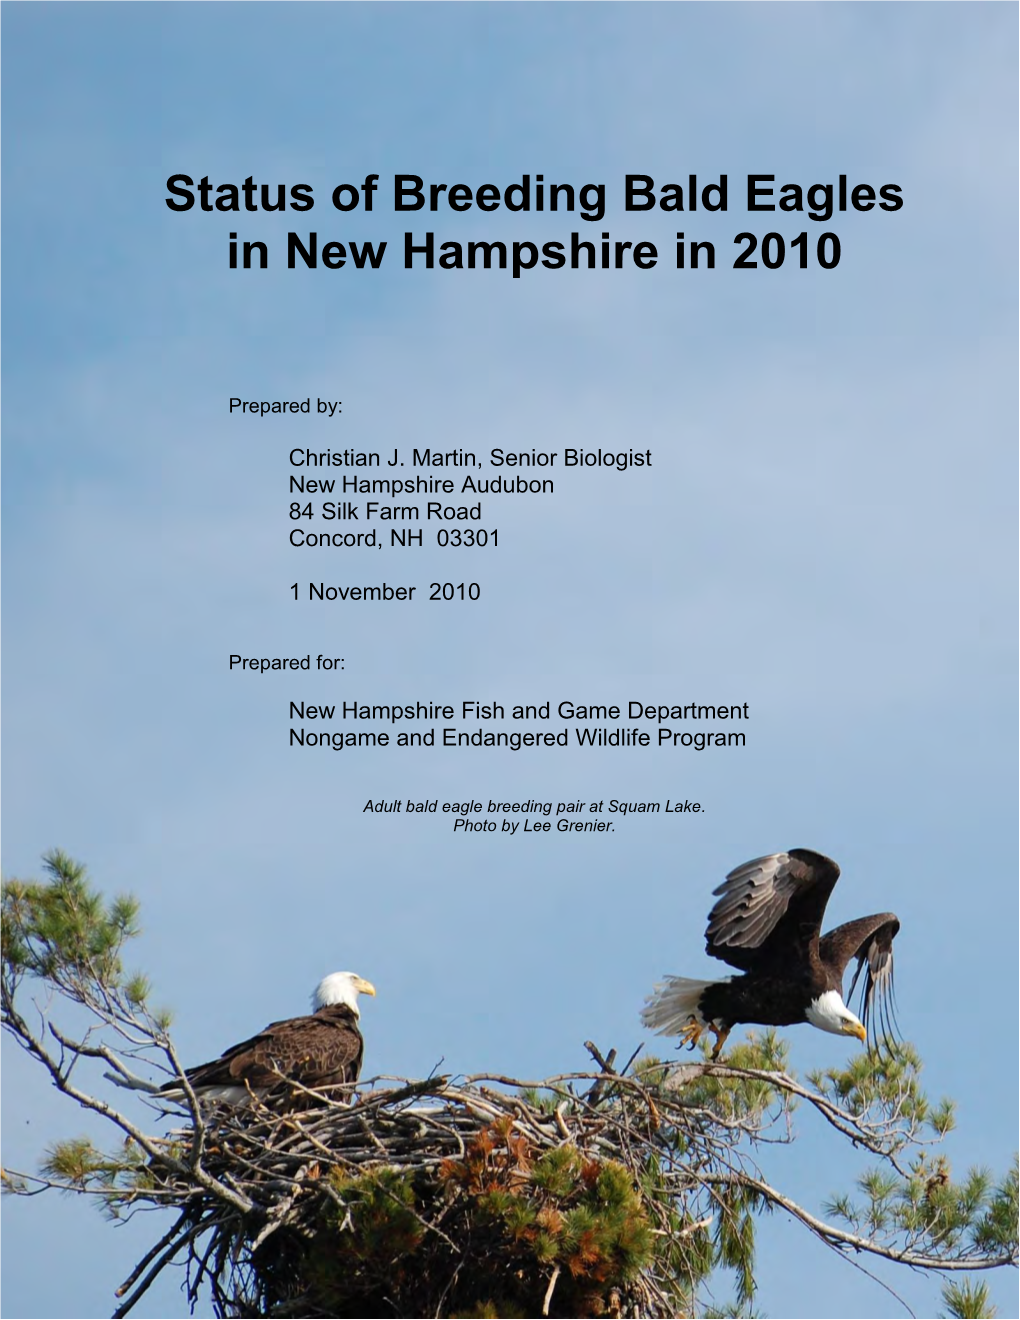 Status of Breeding Bald Eagles in NH in 2010